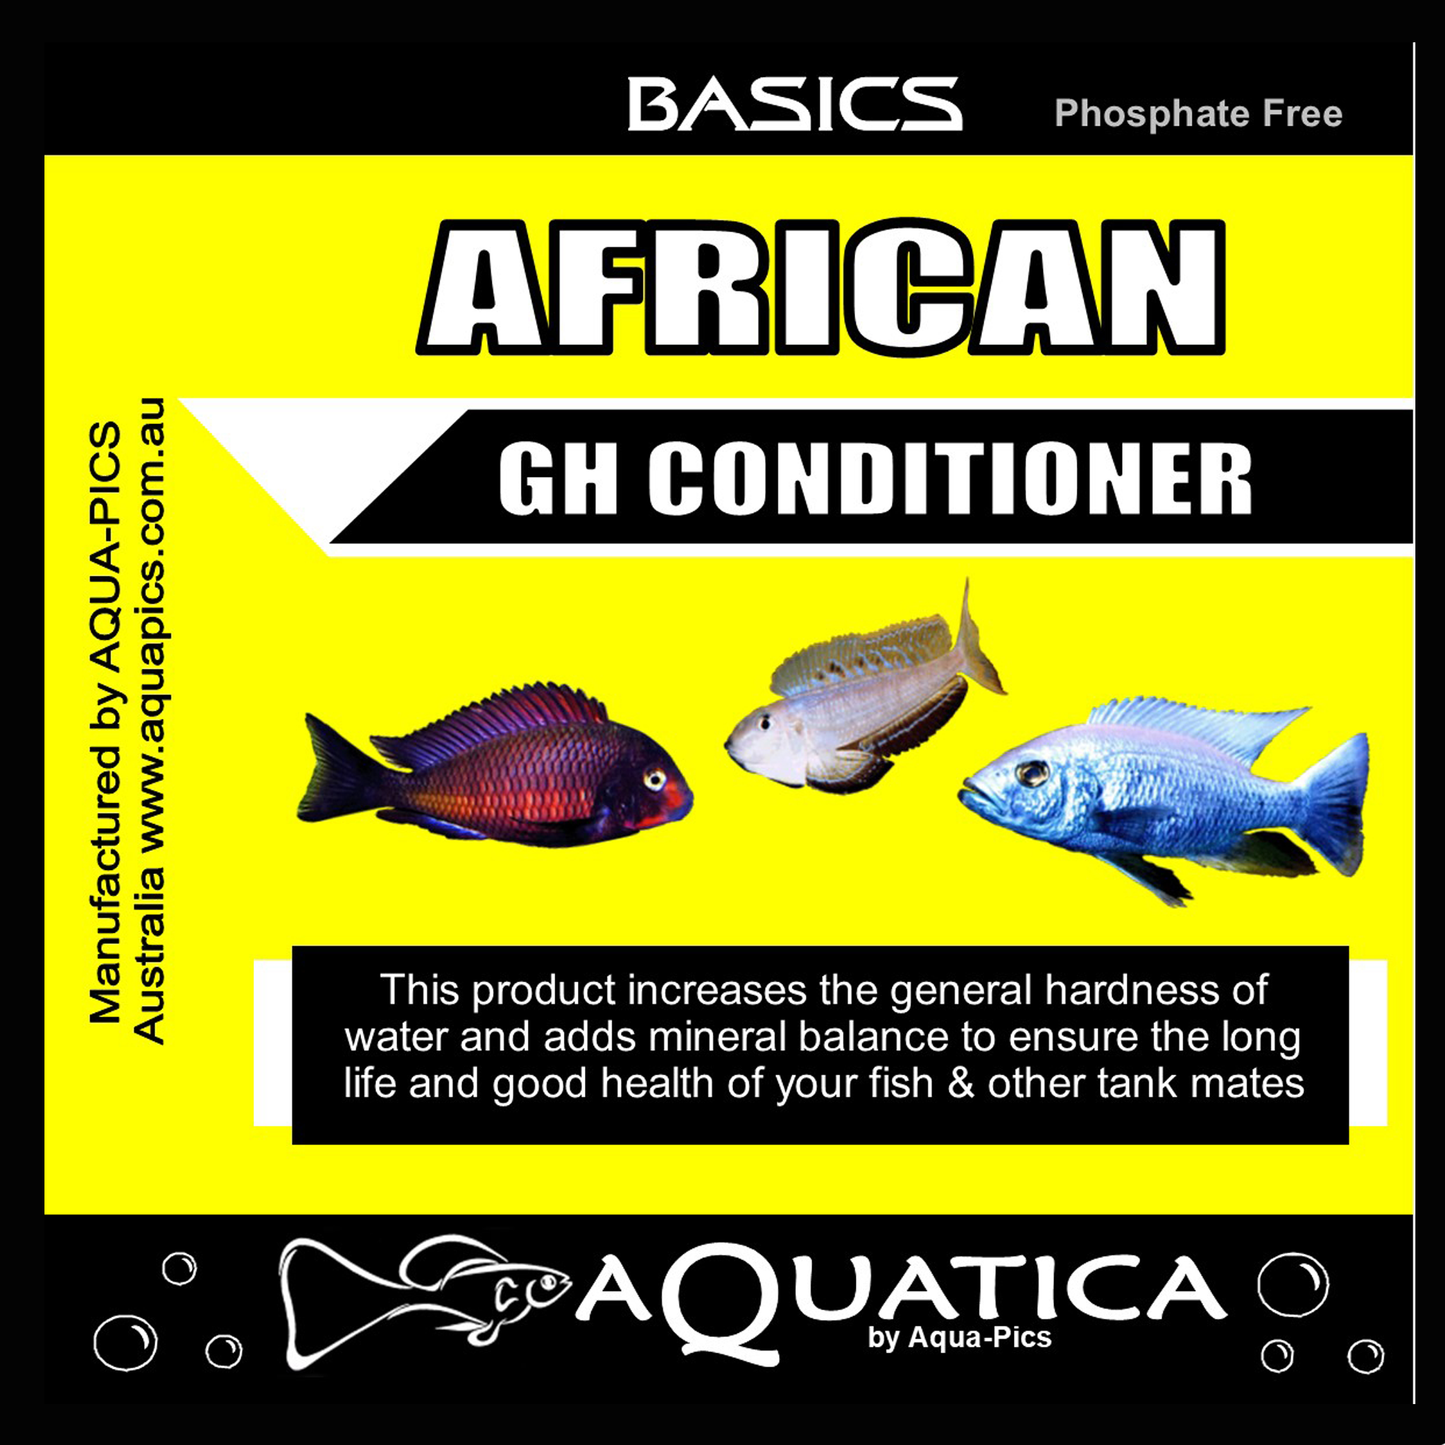 Aquatica Basics African GH Conditioner 500g bag